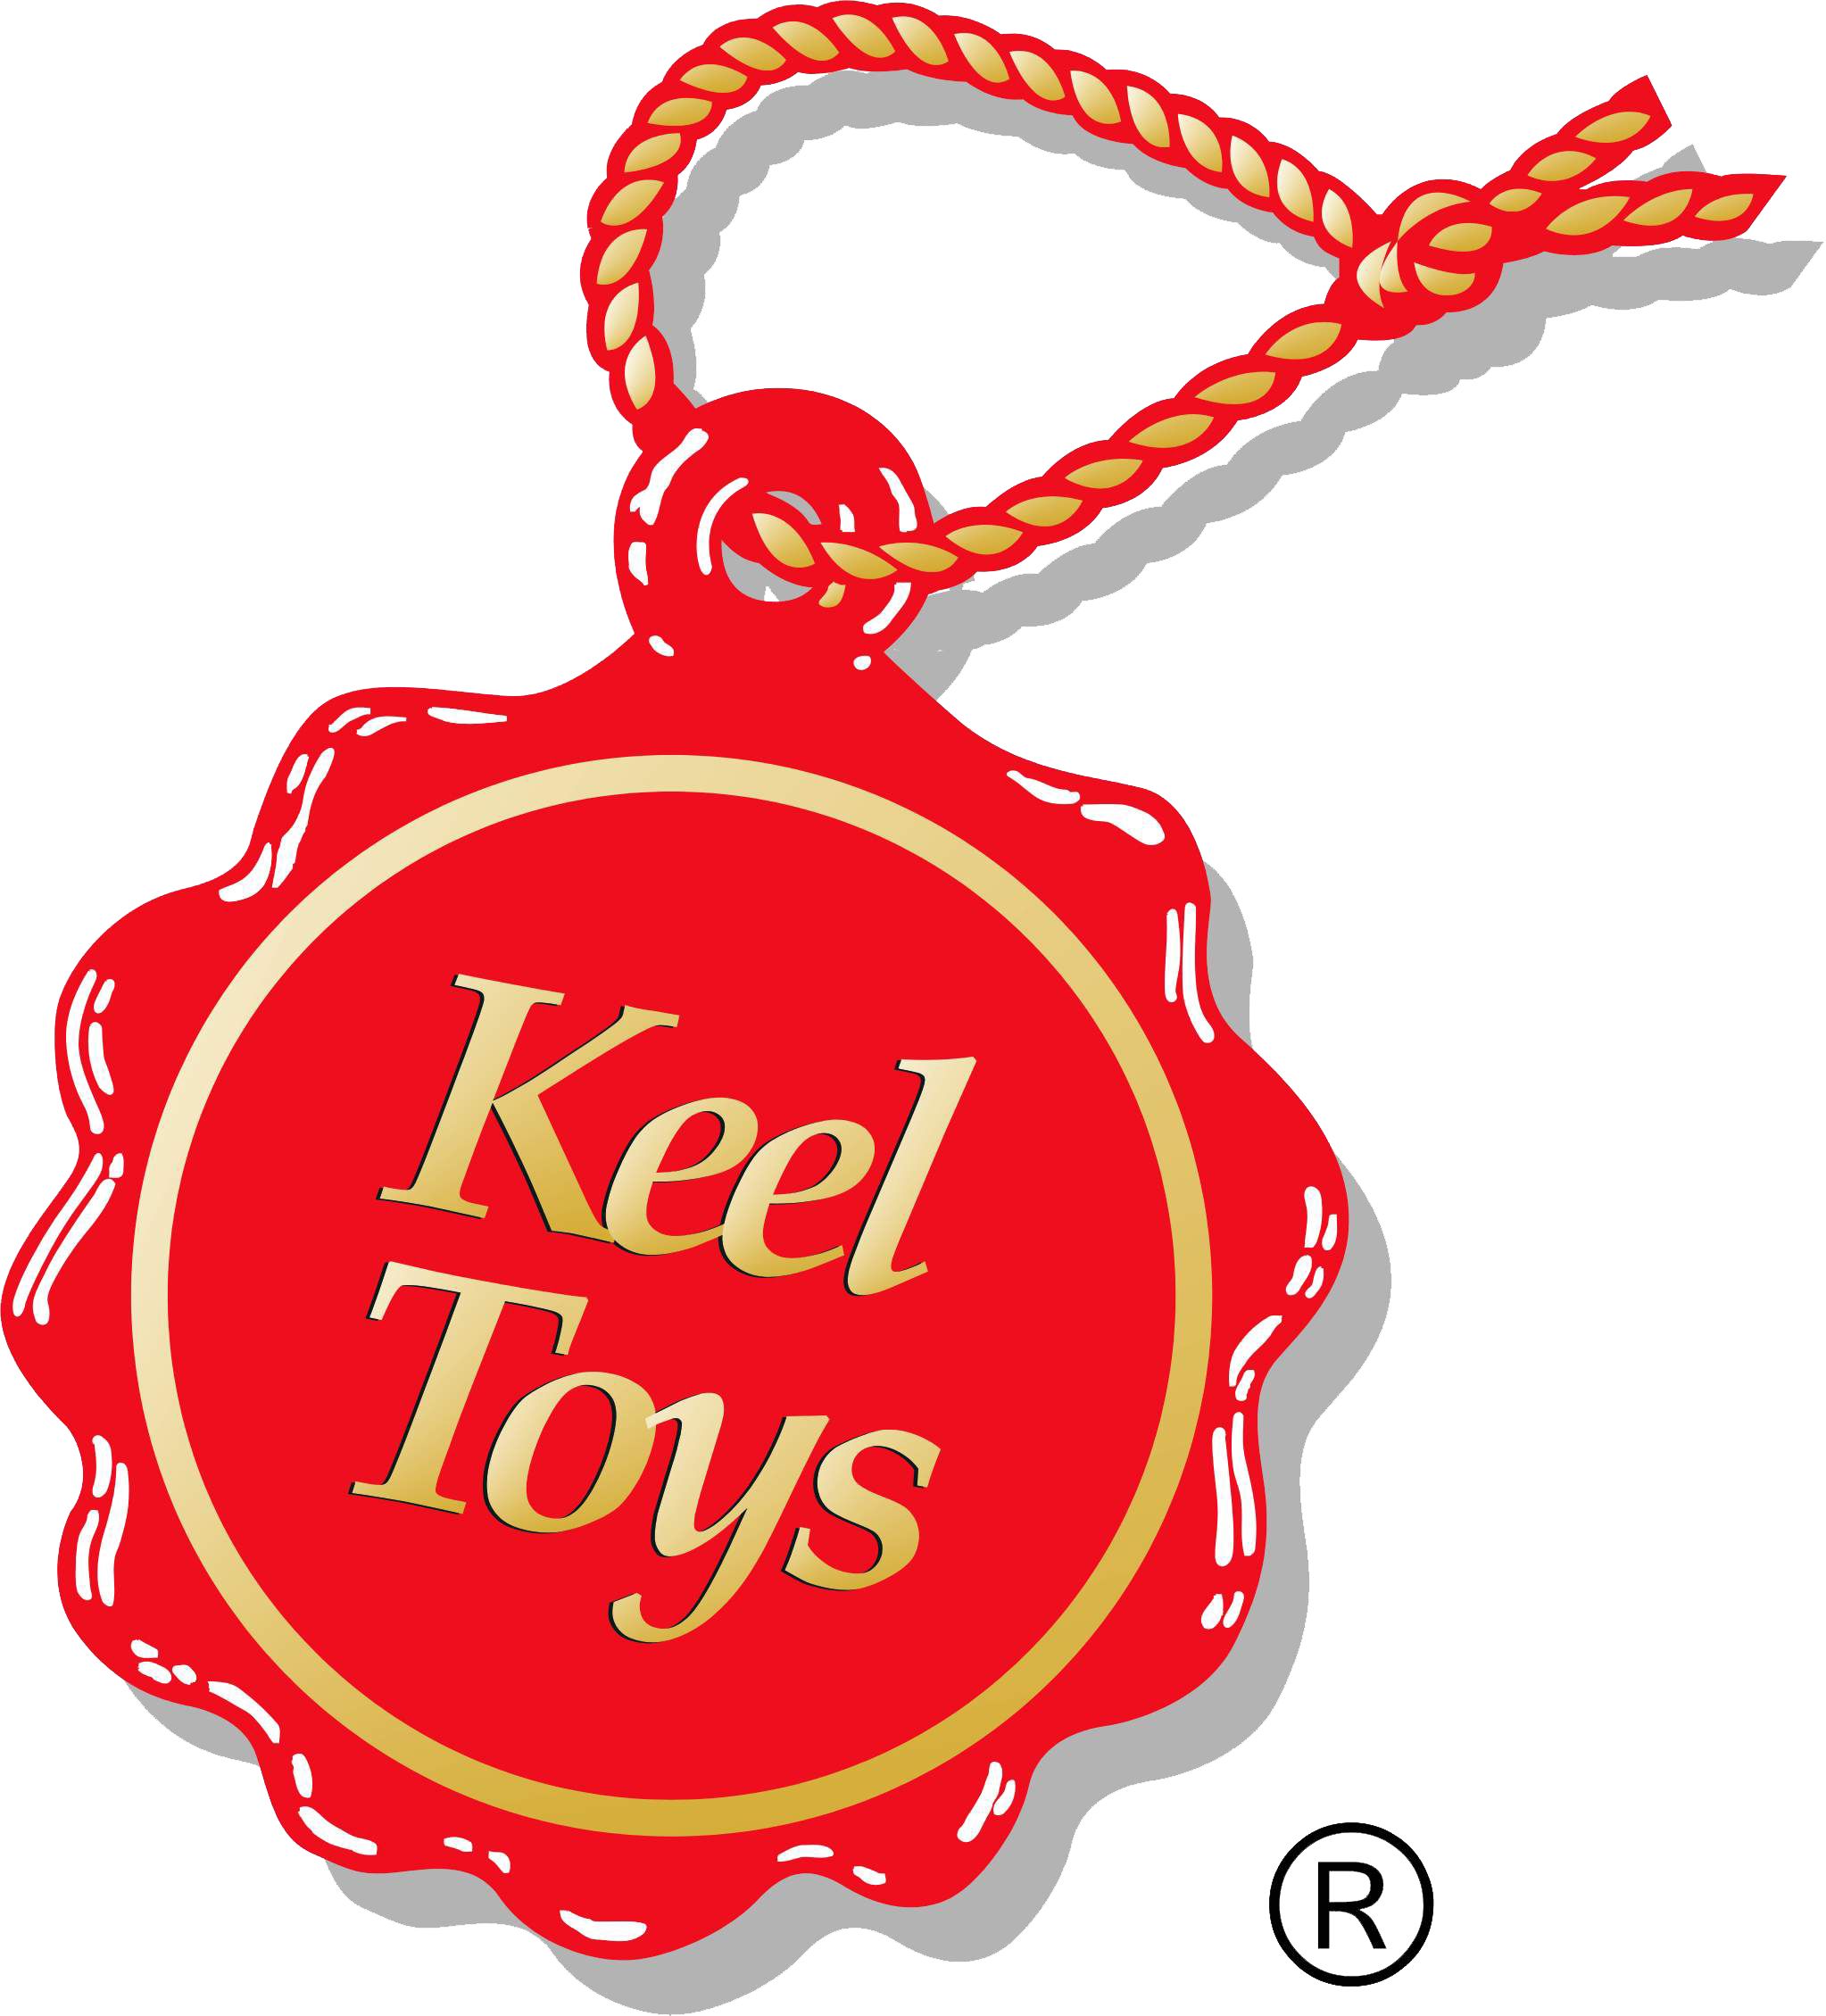 Keel Toys Ltd